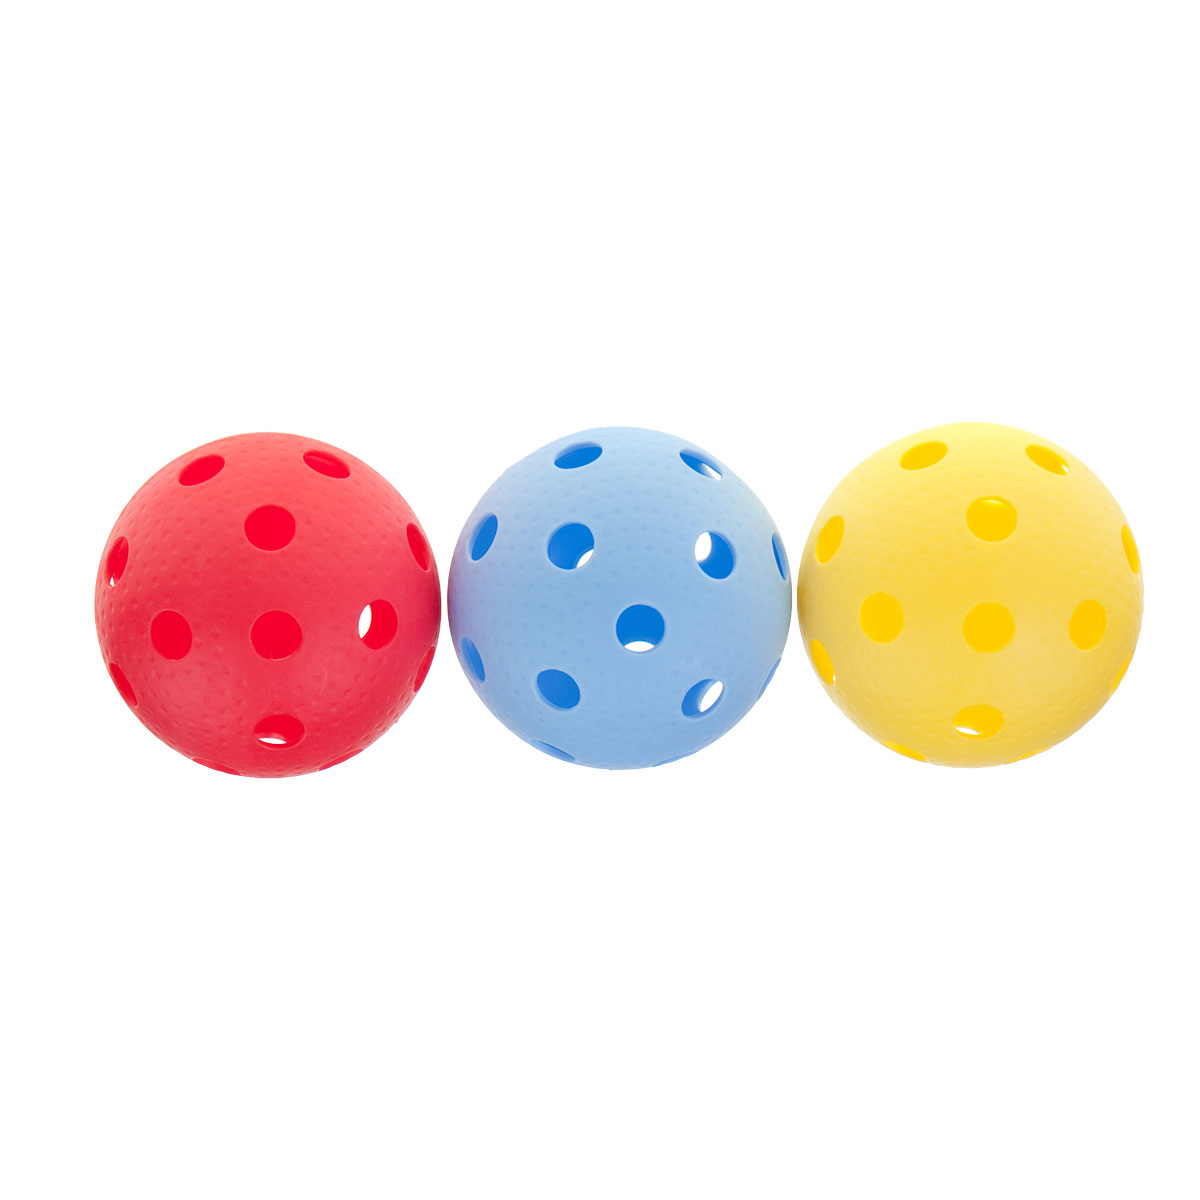 YM-003C - 3 floorball ball set